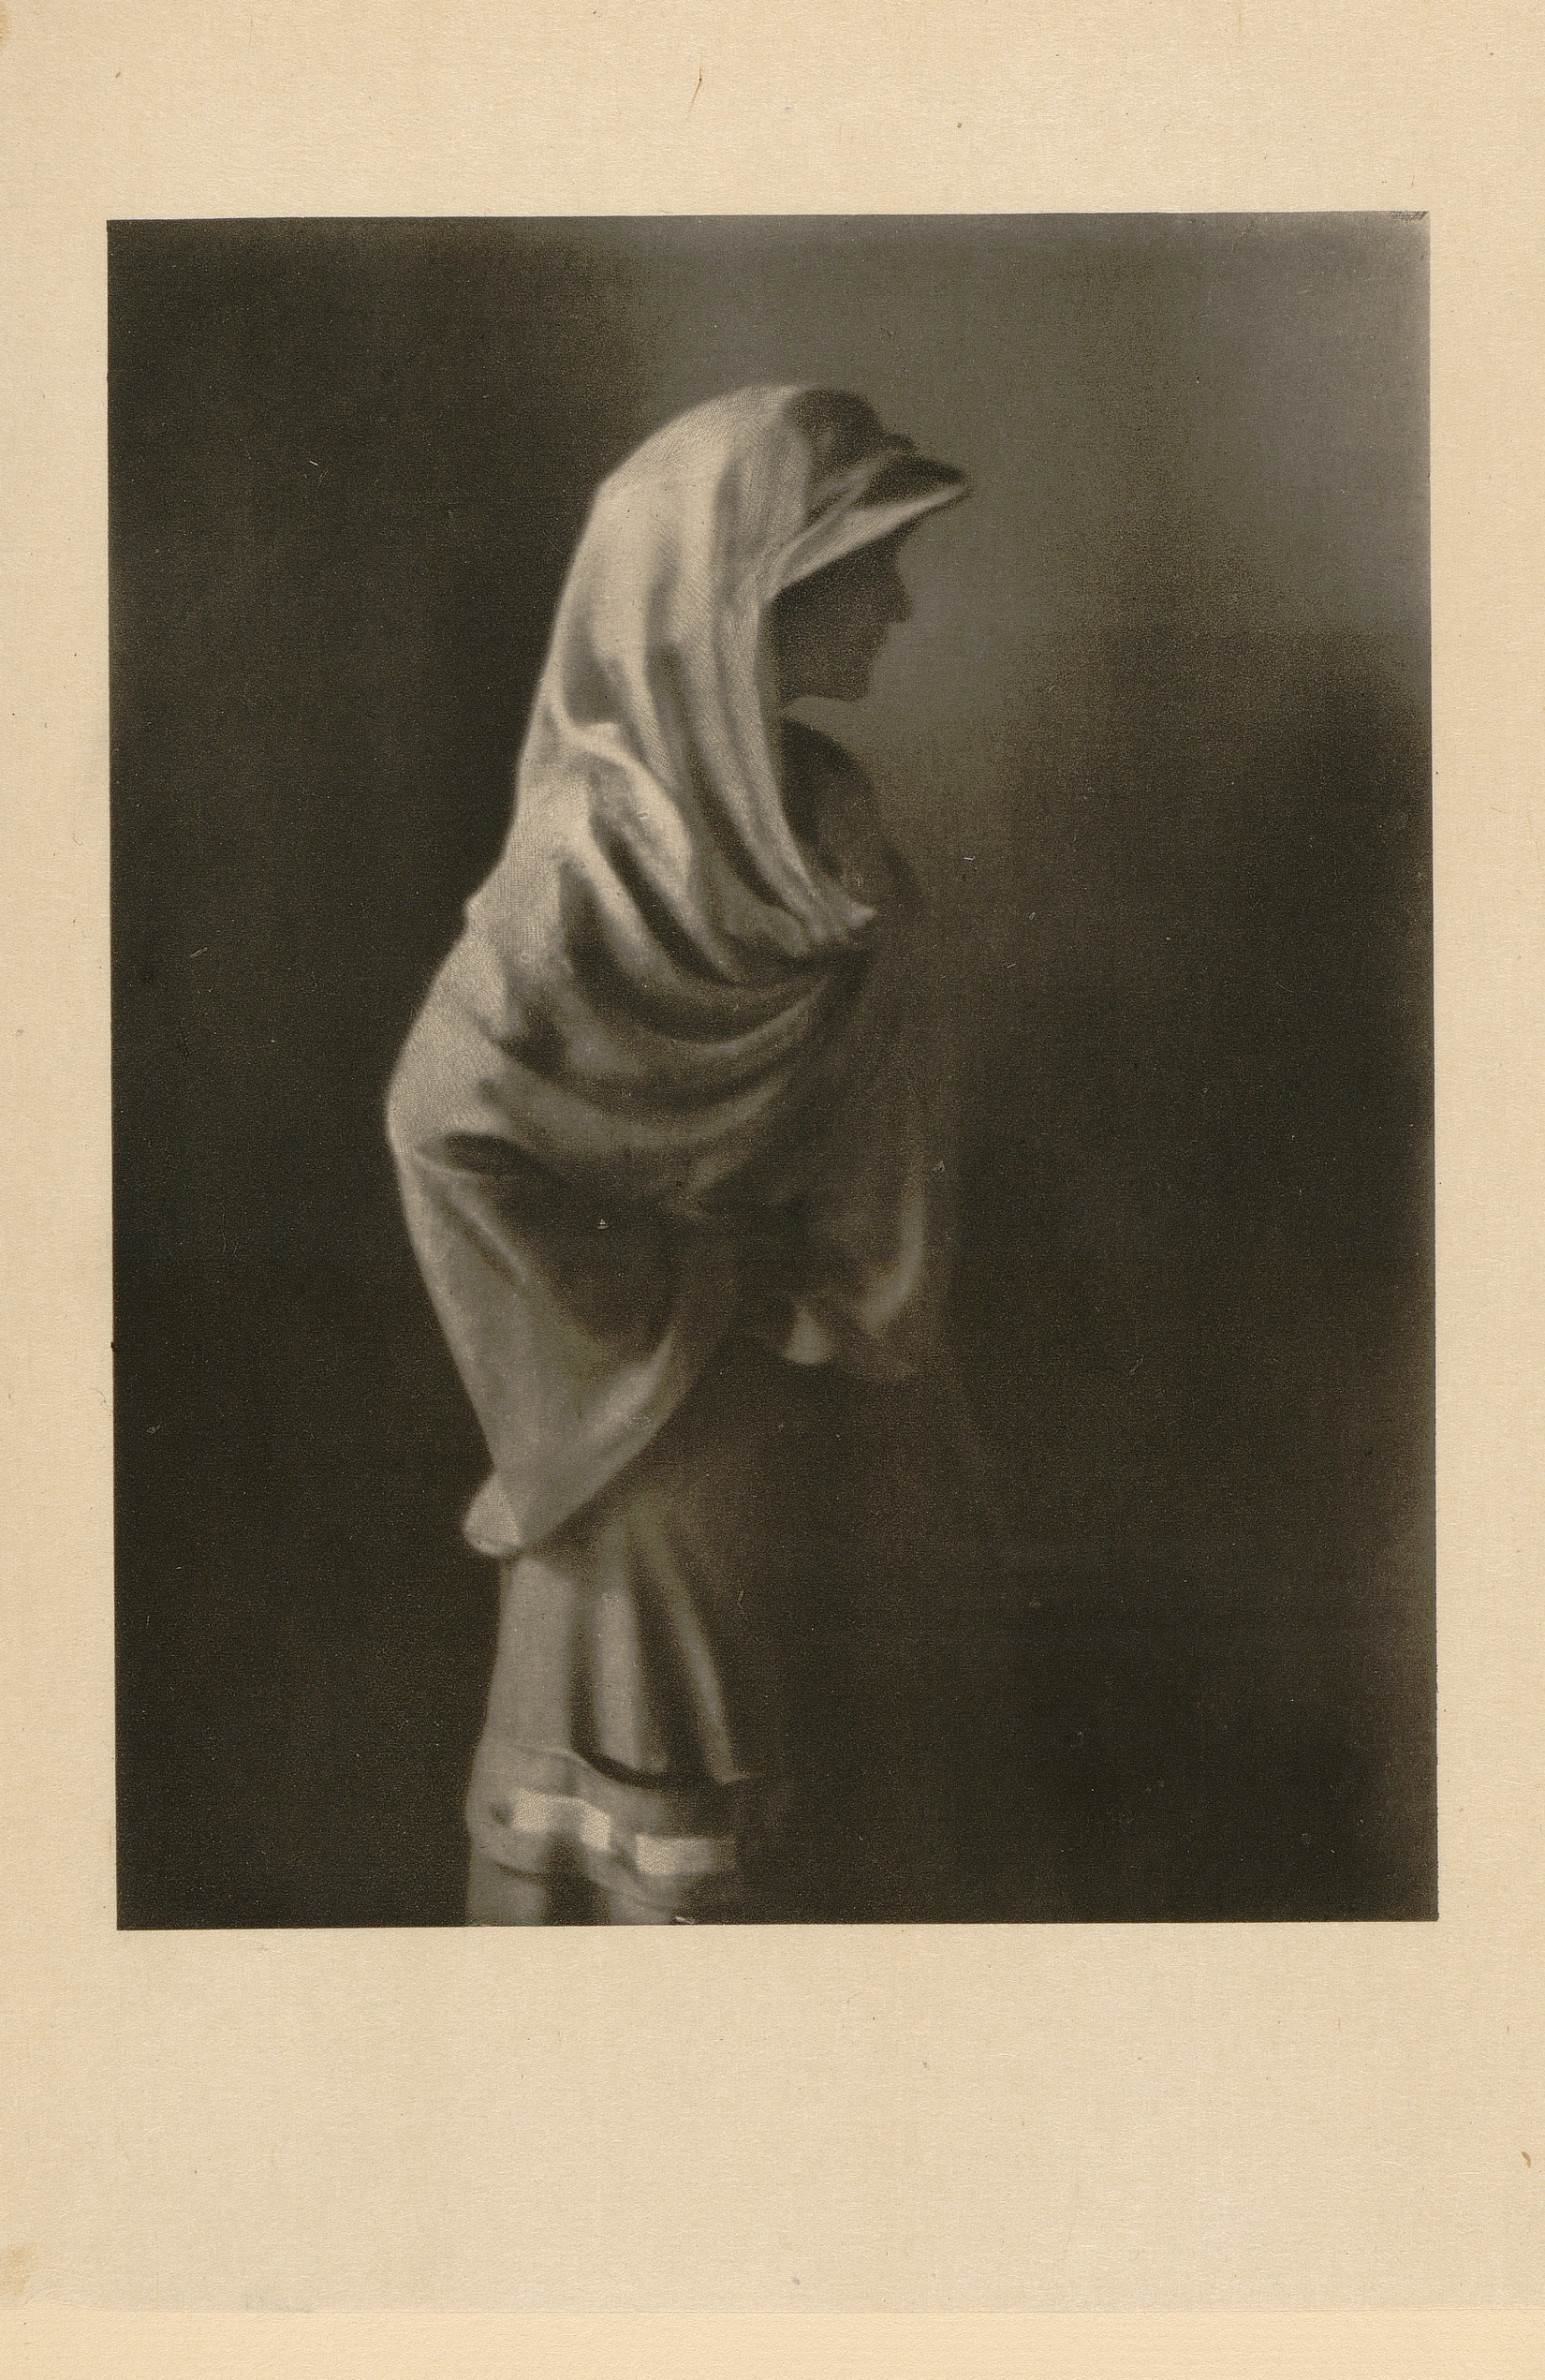 Paul Burty Haviland ::  Miss Doris Keane. Published in Camera Work nº 39, 1912. | src Brown University